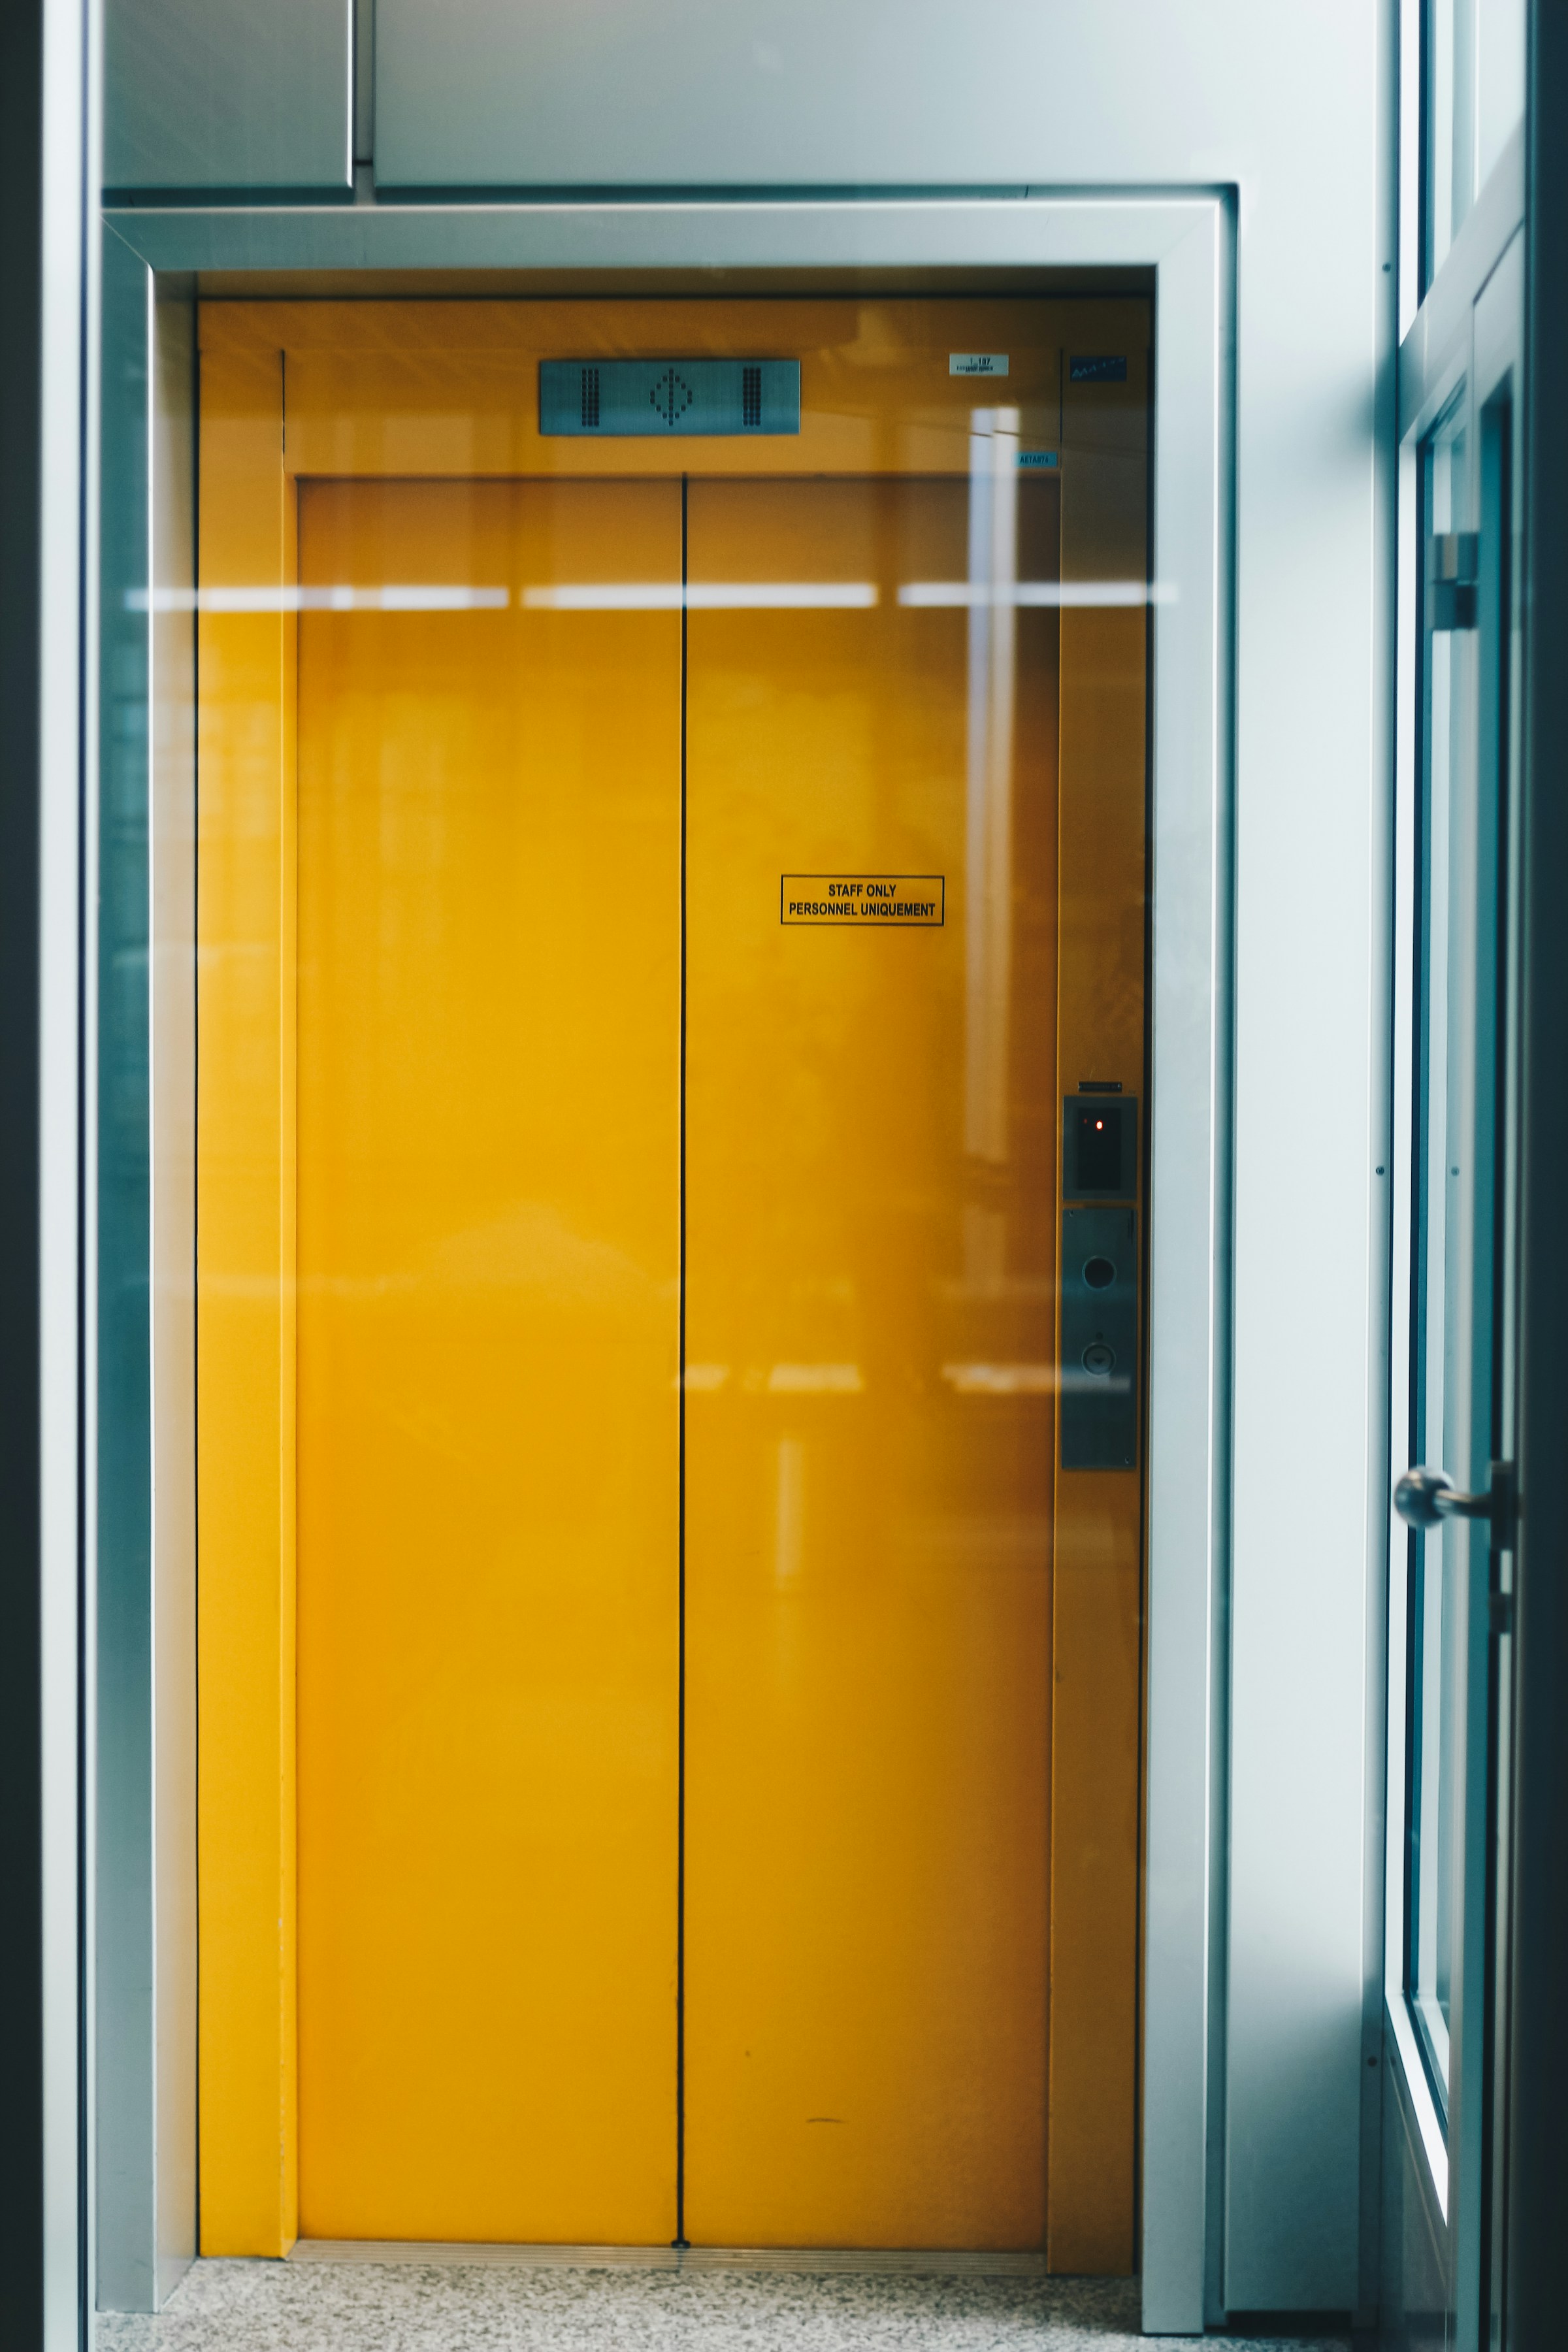 A closed elevator door | Source: Unsplash